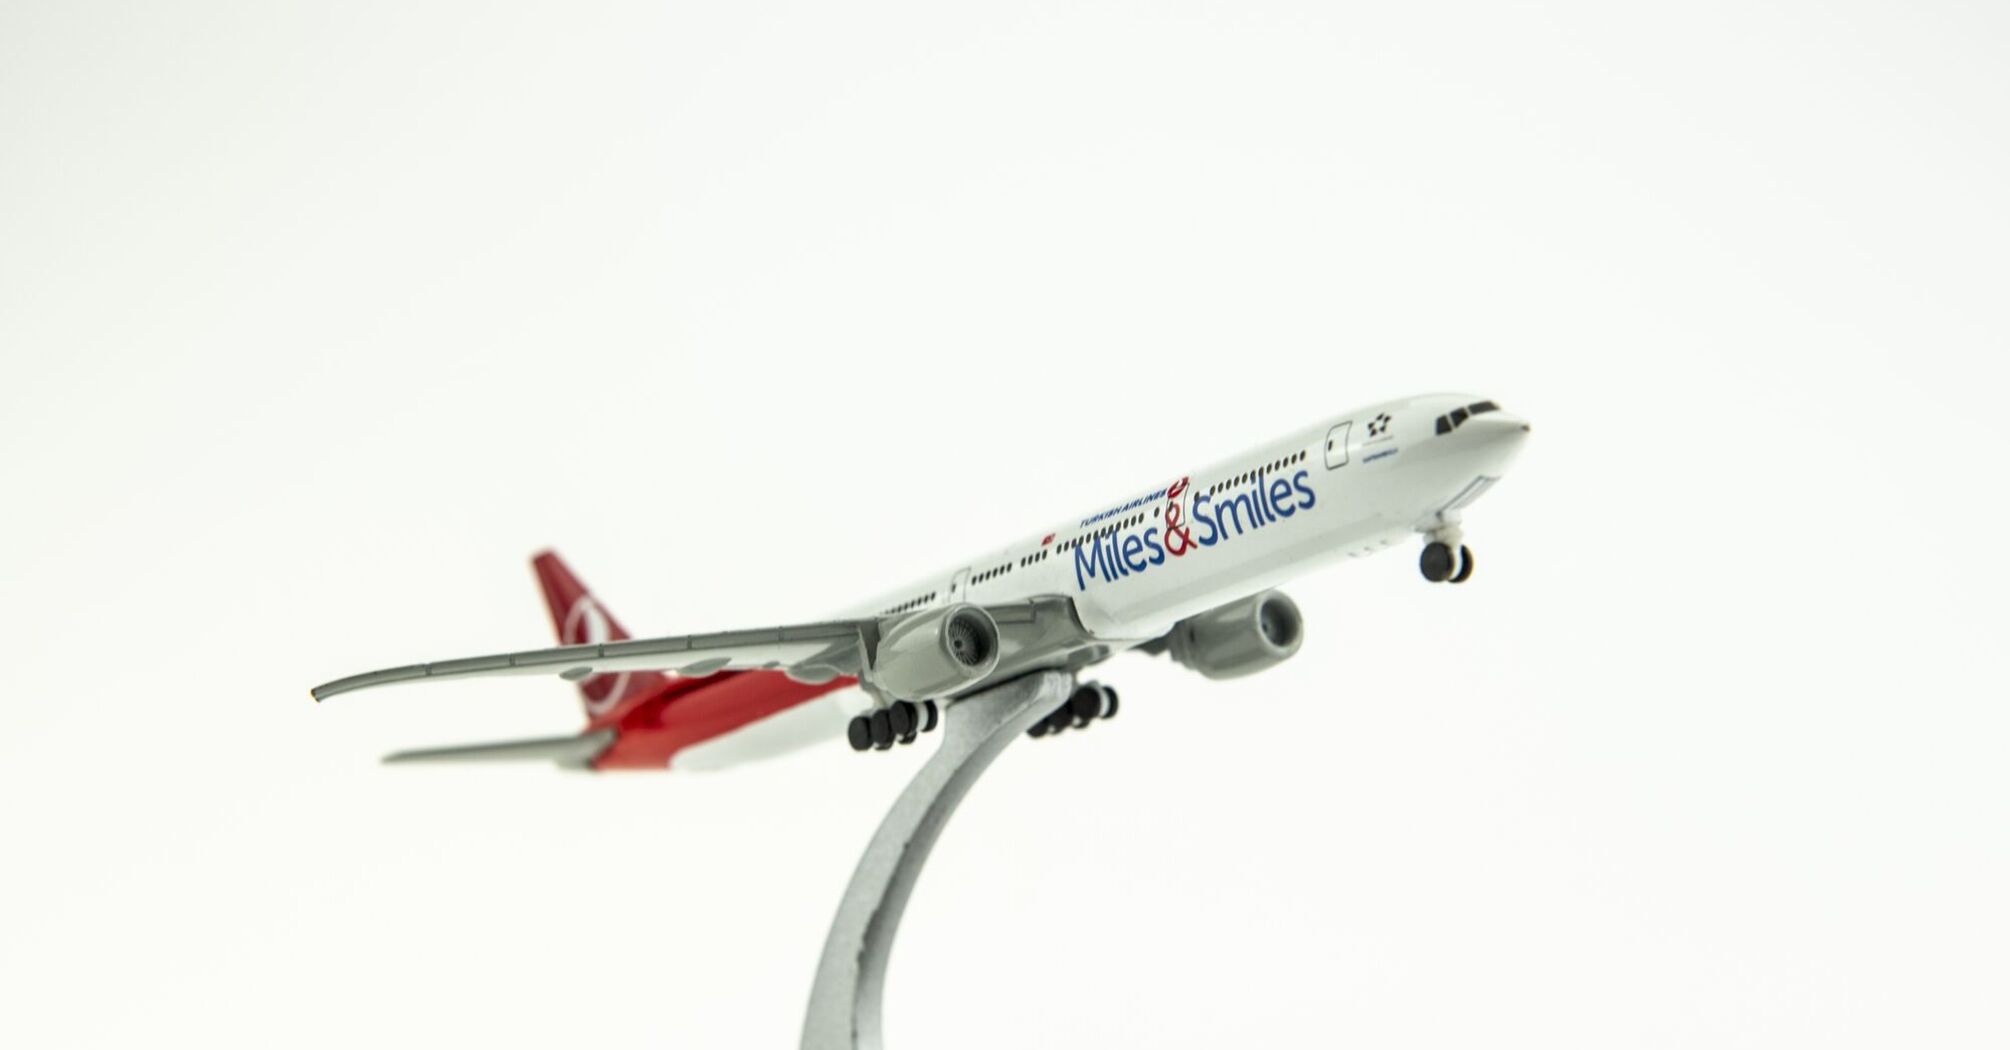 Turkish Airlines airplane figurine